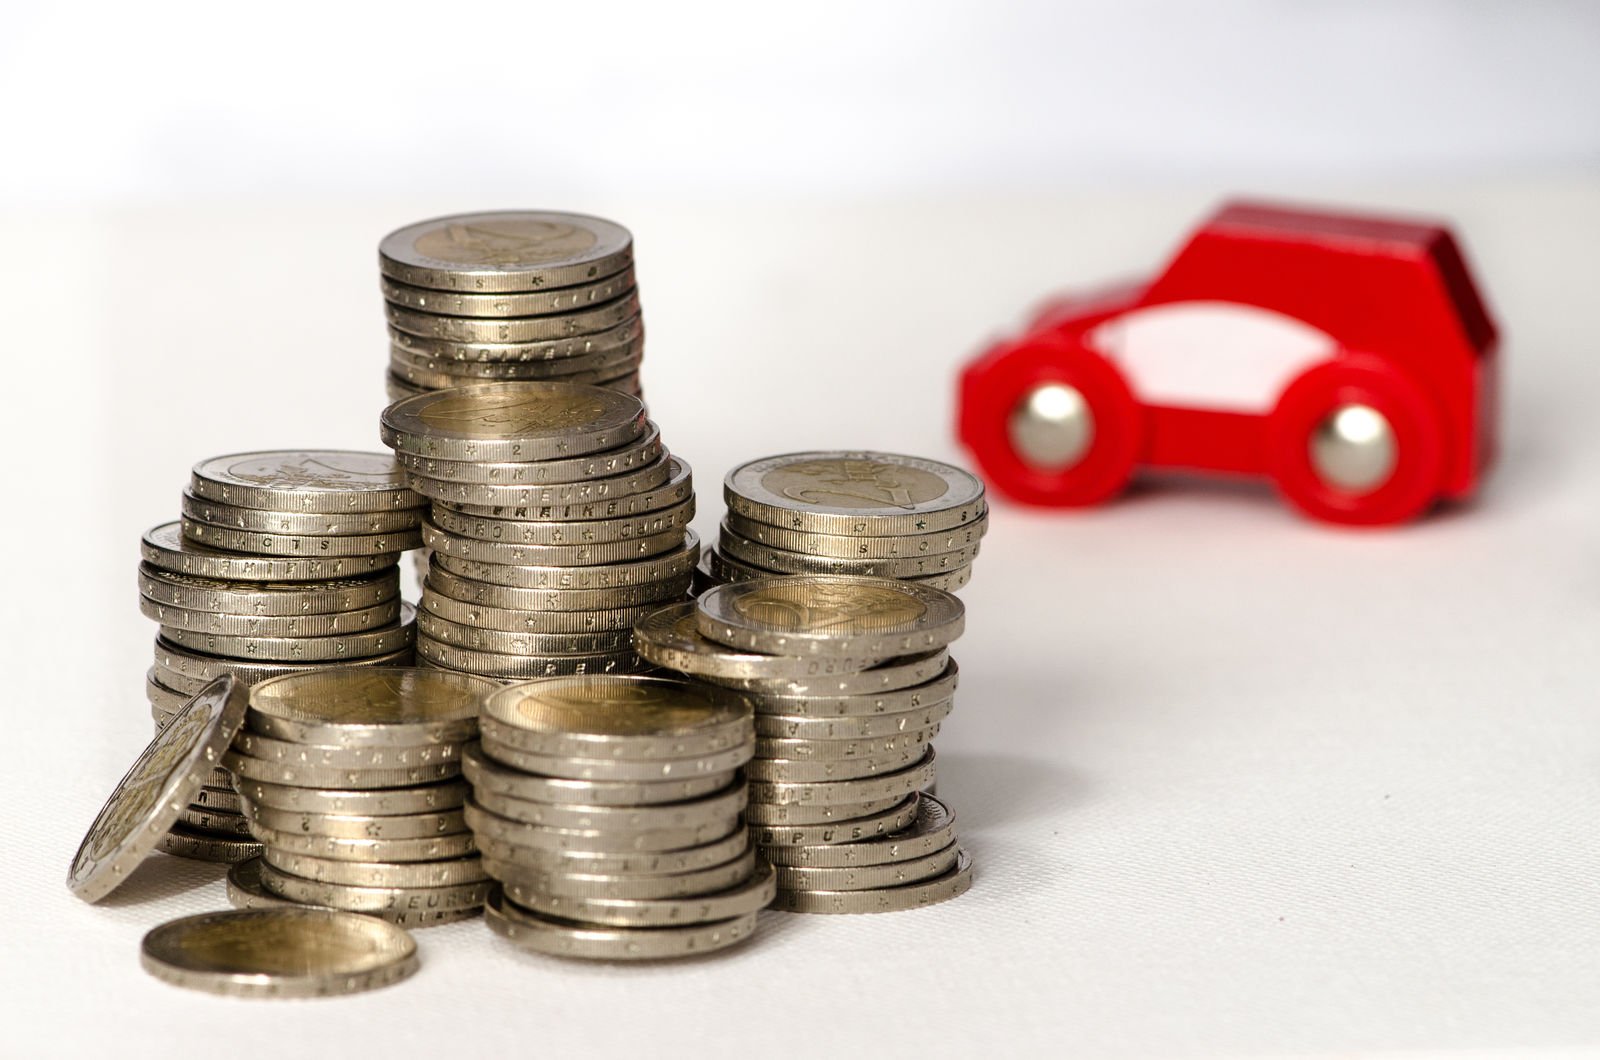 Online Dodge Durango Insurance Rates [List of Money Saving Tips]